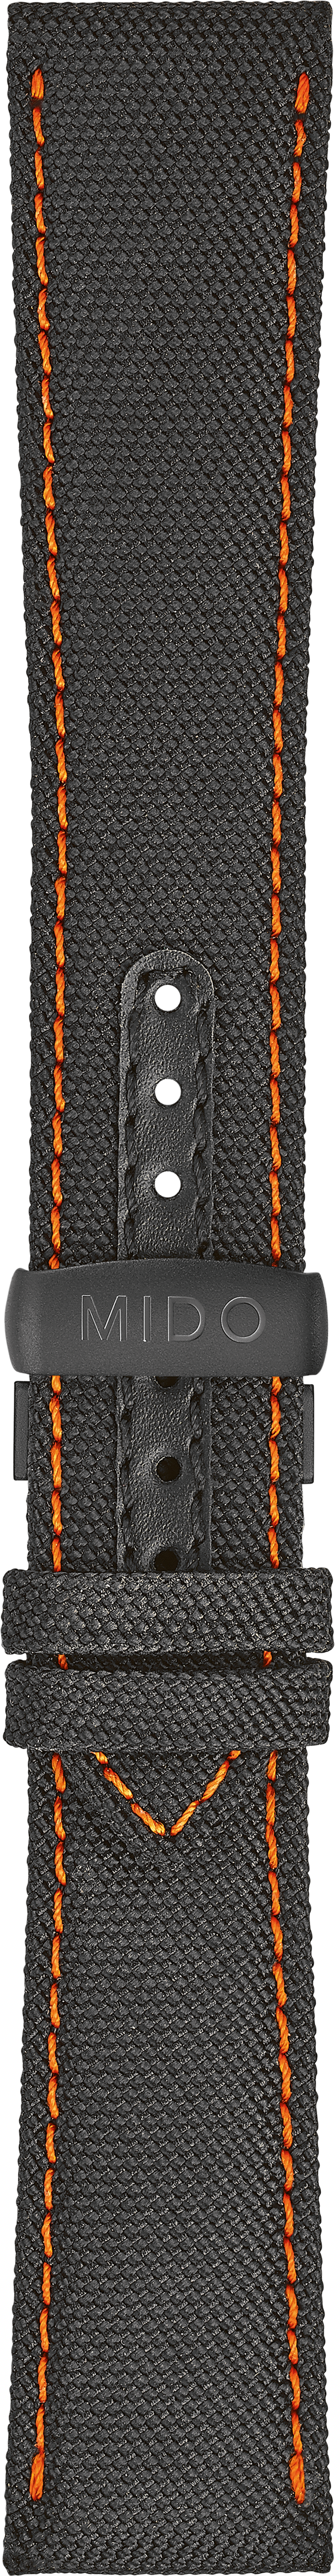 Mido Commander black calfskin strap